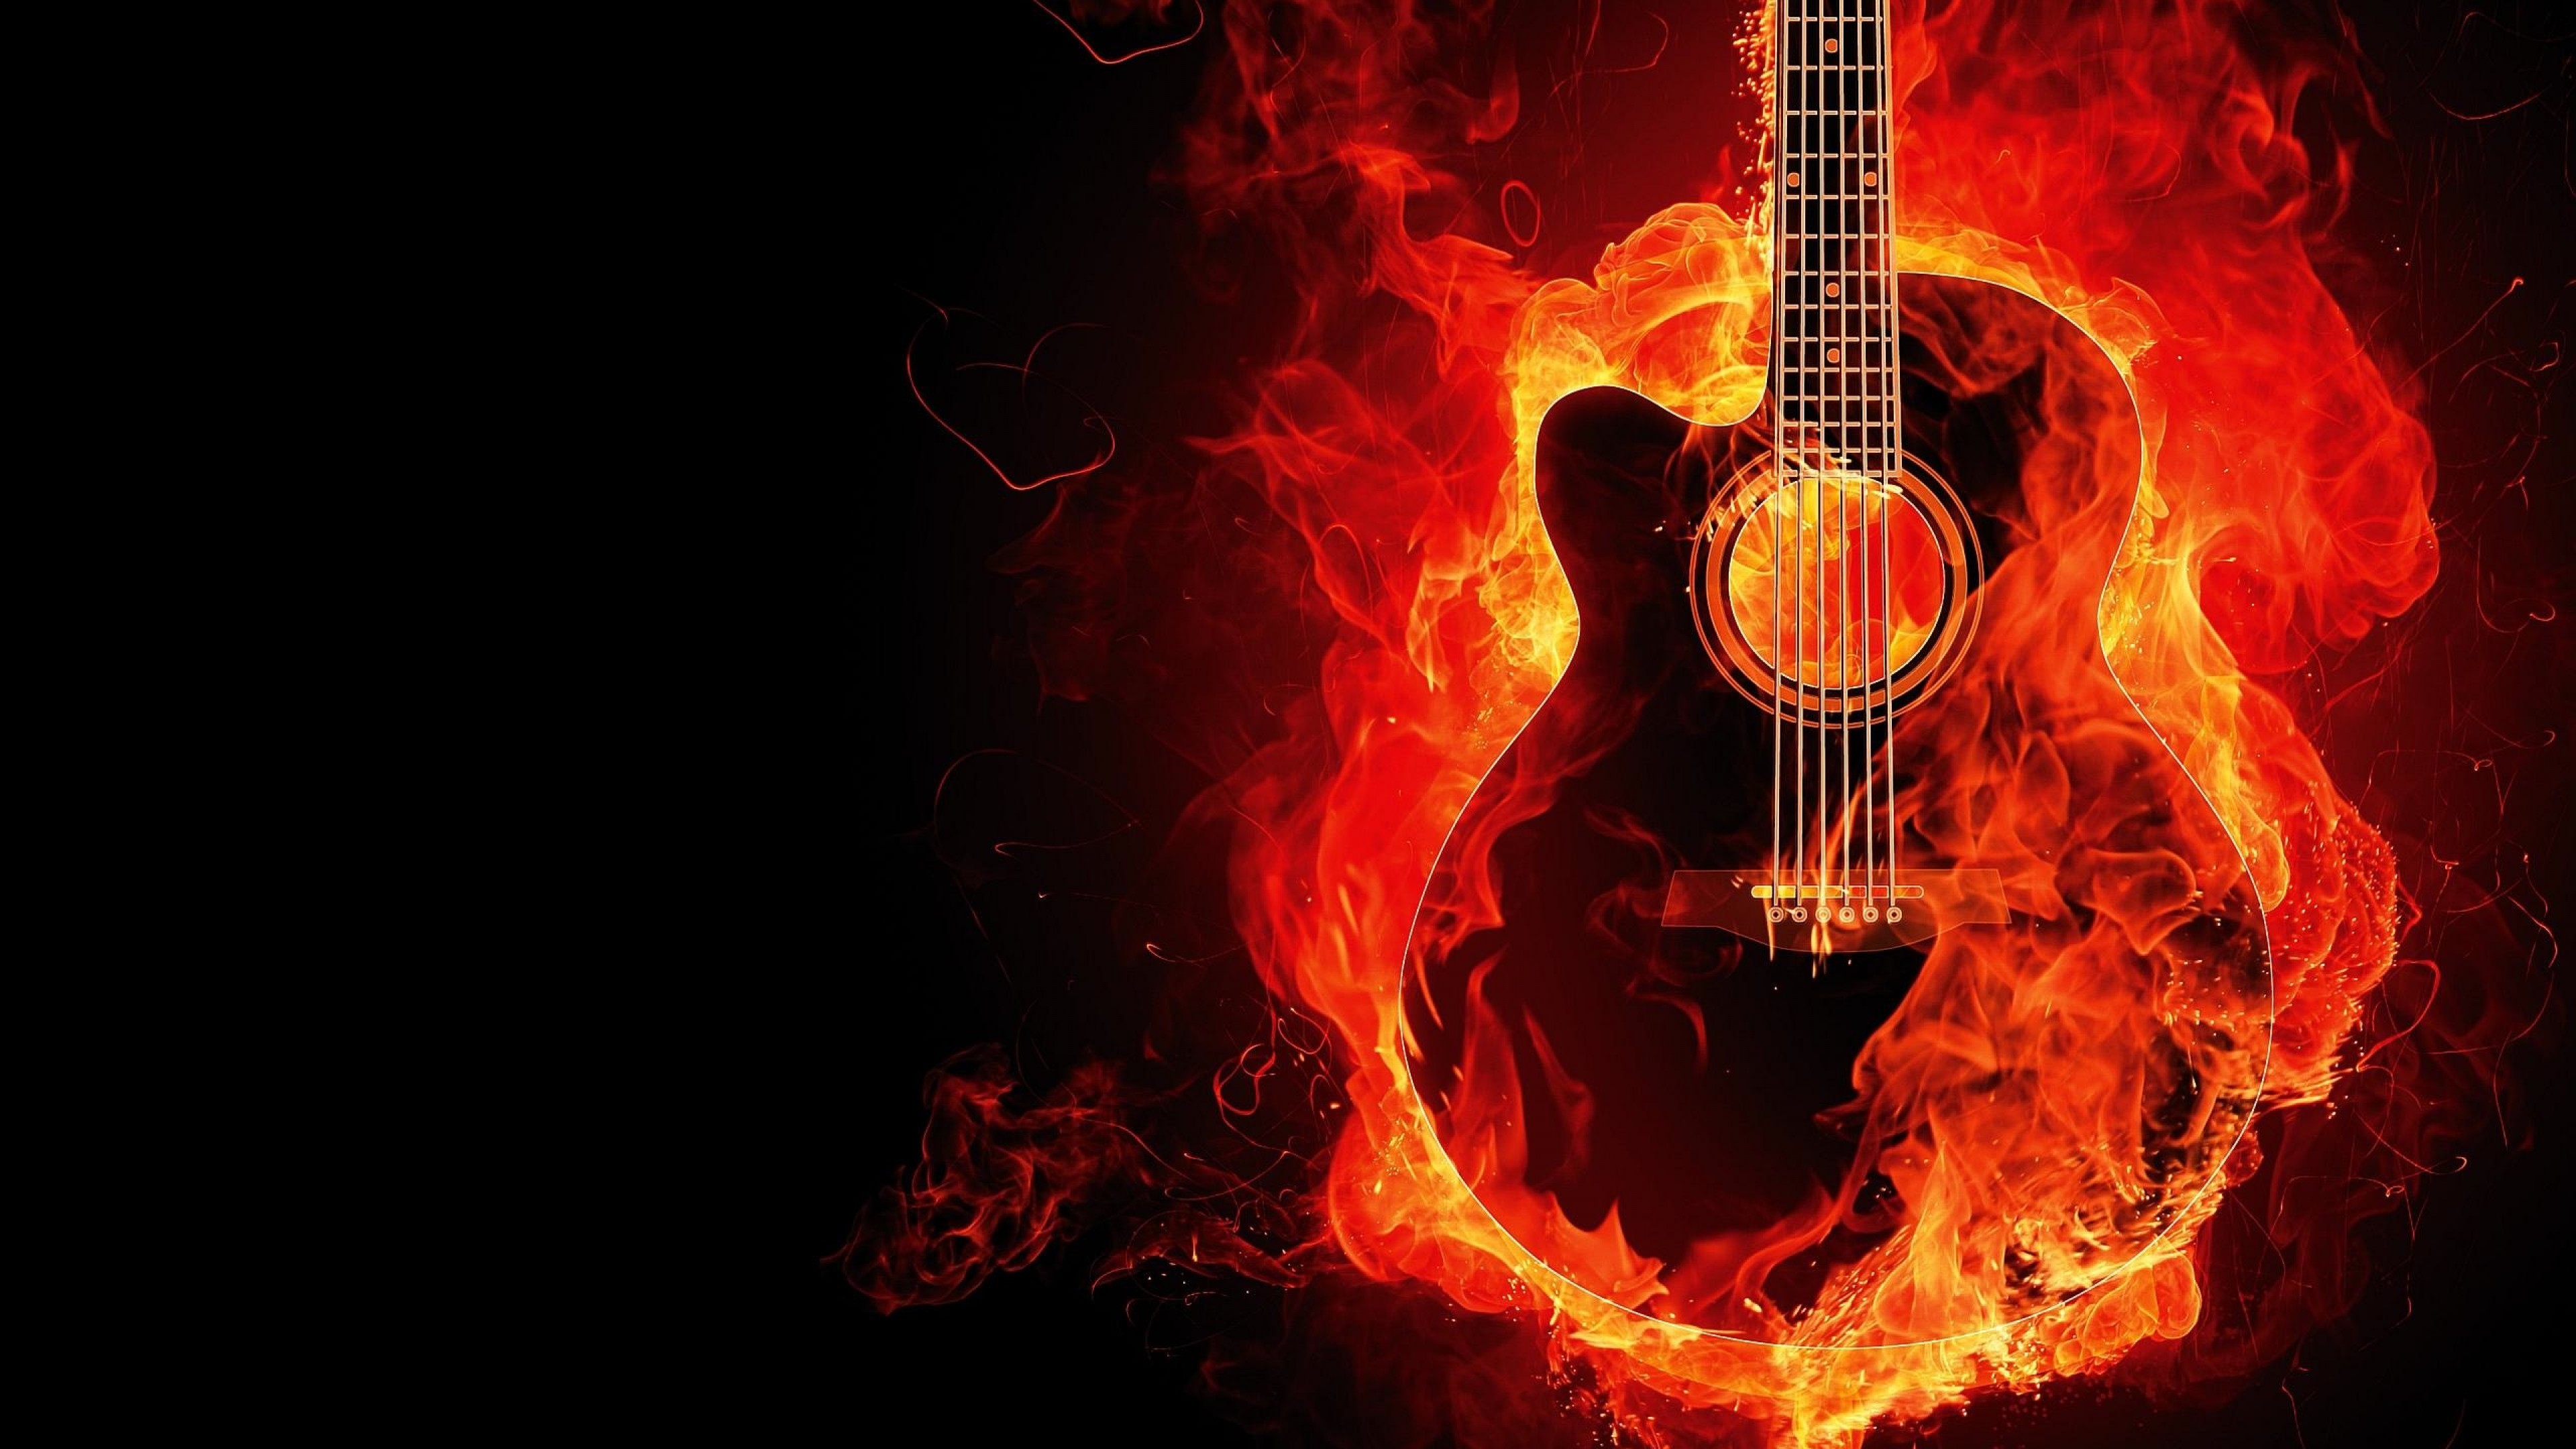 Download Fire Guitar Full Hd Wallpaper for Desktop and ...